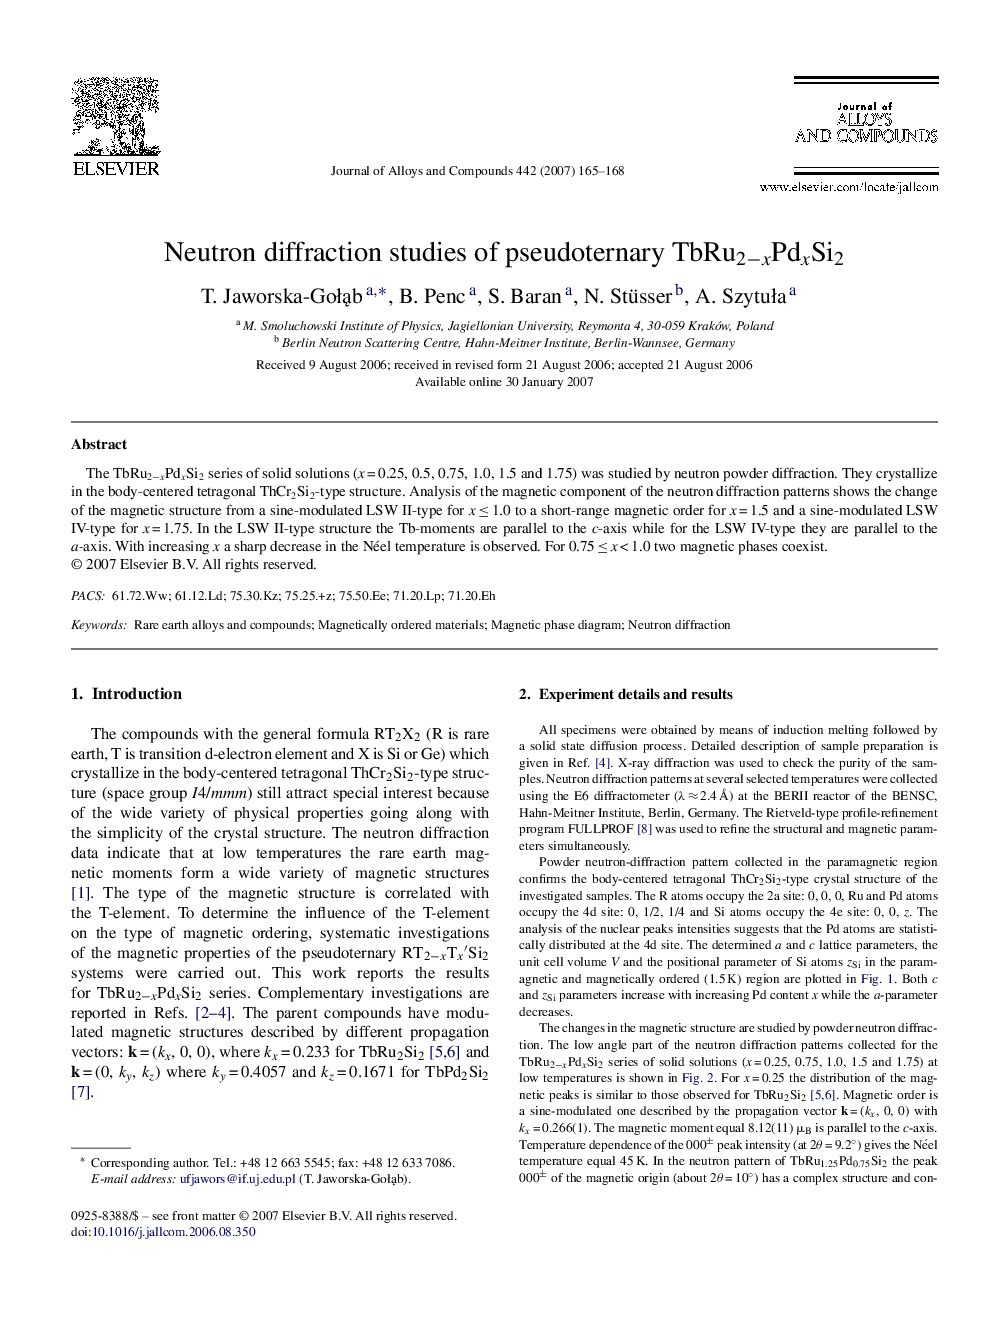 Neutron diffraction studies of pseudoternary TbRu2âxPdxSi2